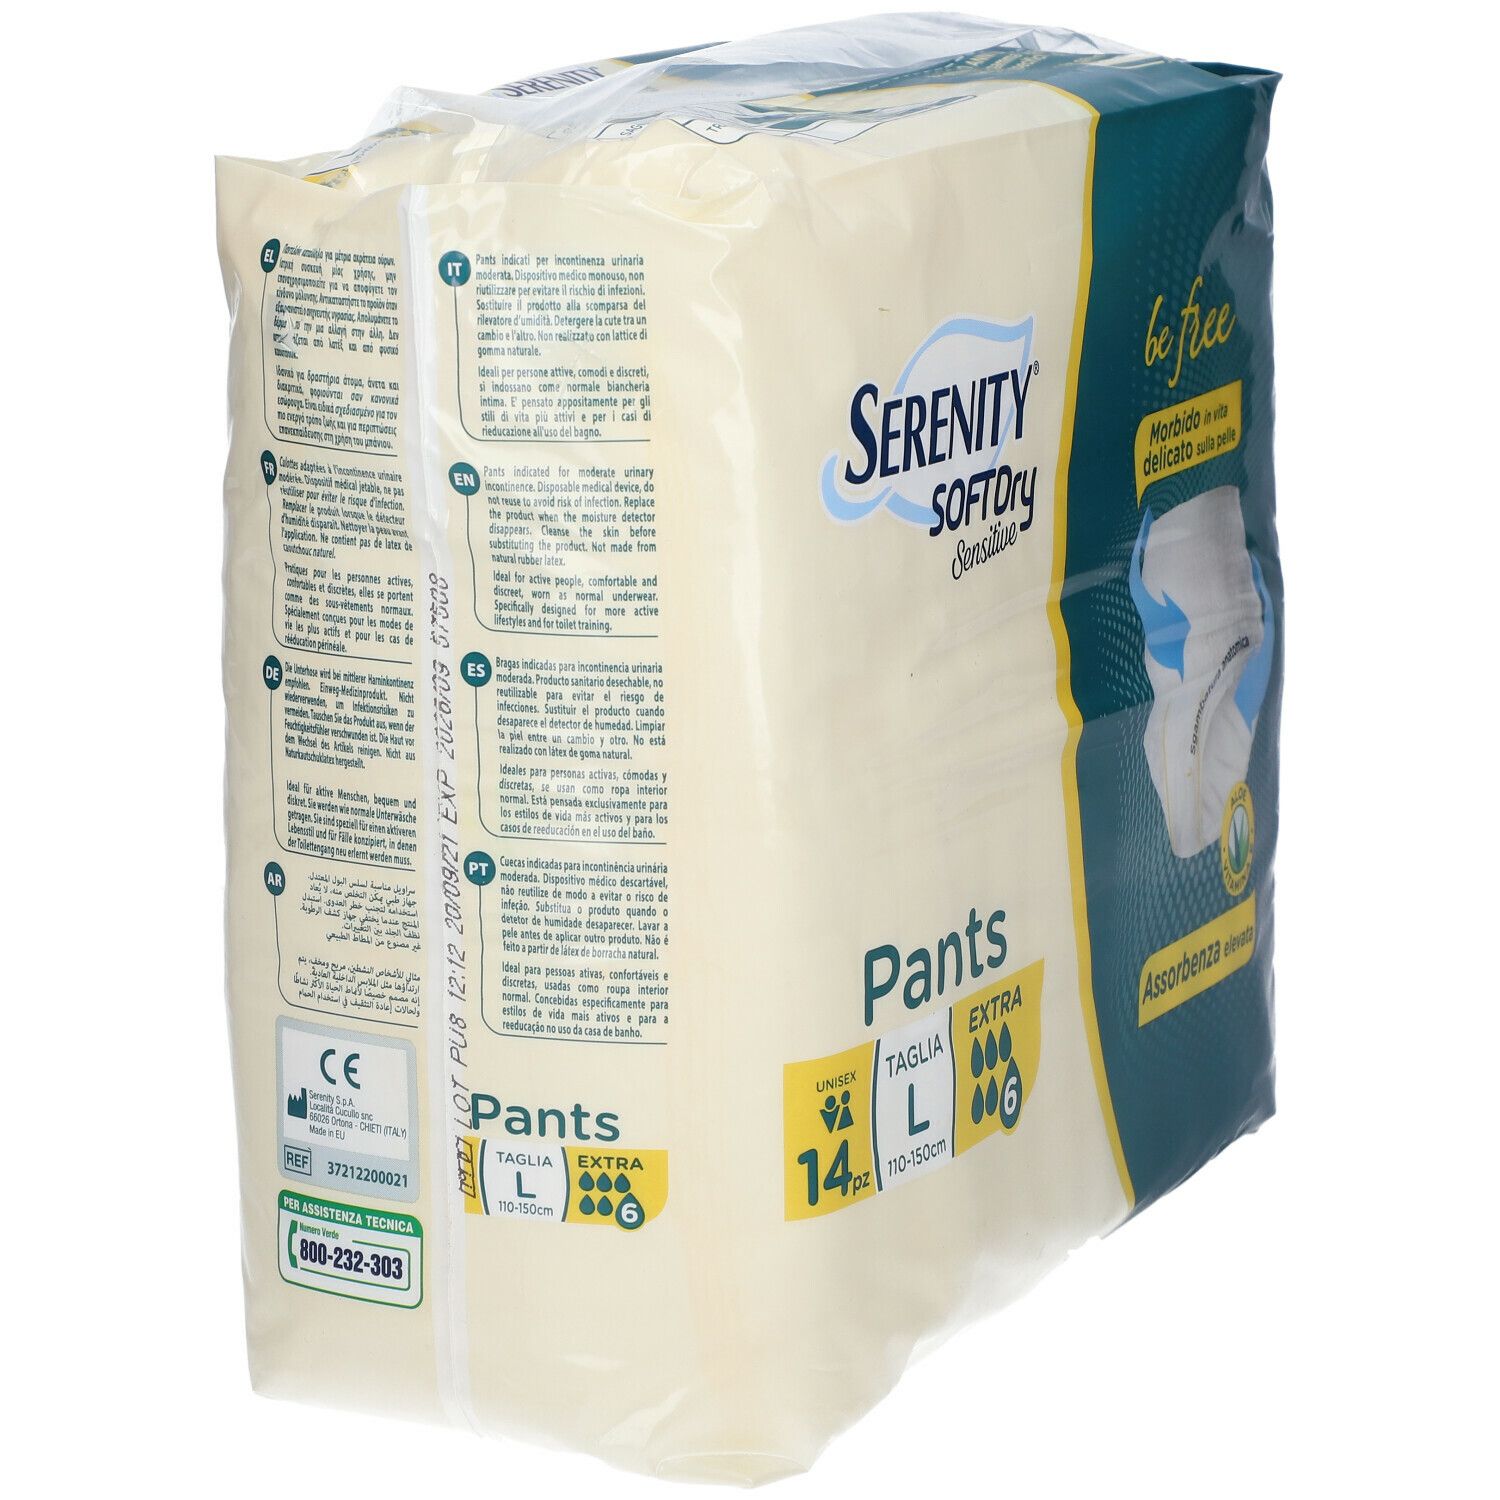 Serenity Soft Dry Sensitive Pants Pannolini Extra Taglia XL 14